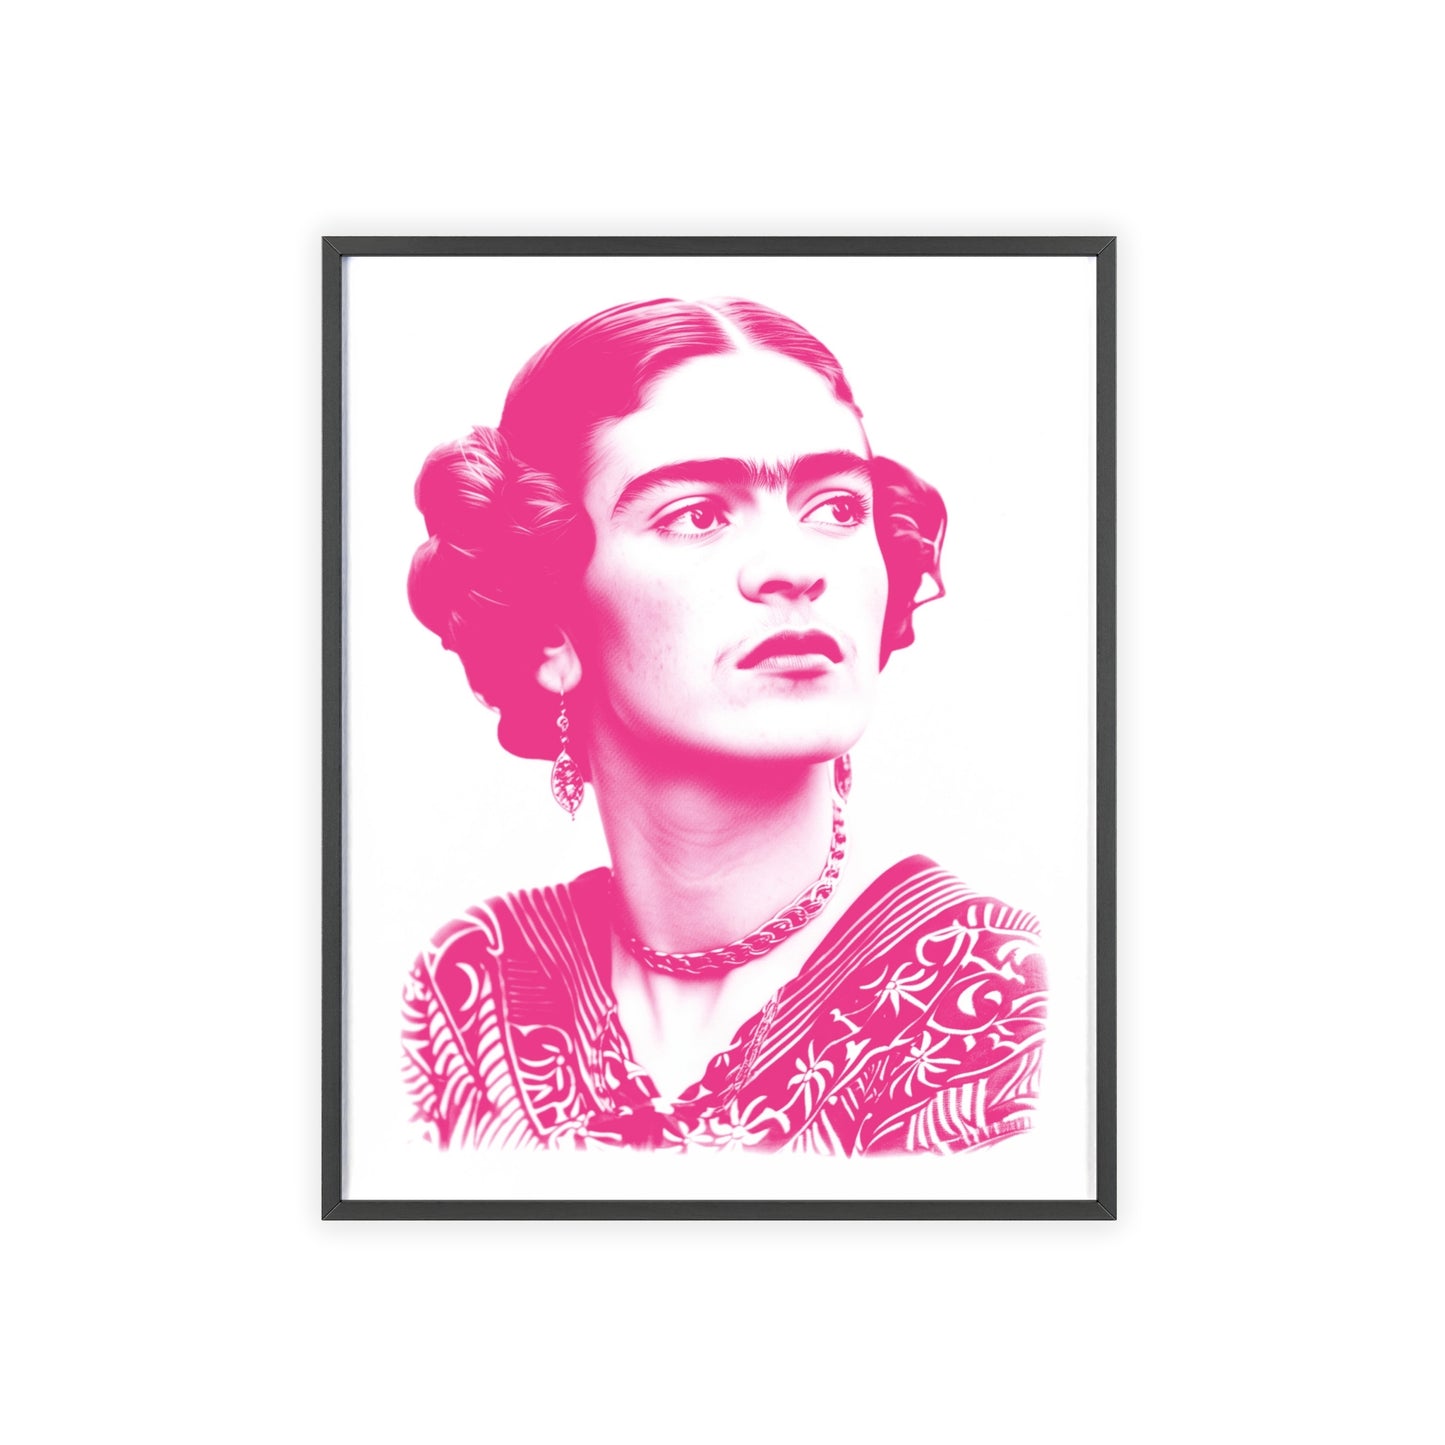 Frida en magenta - Portrait